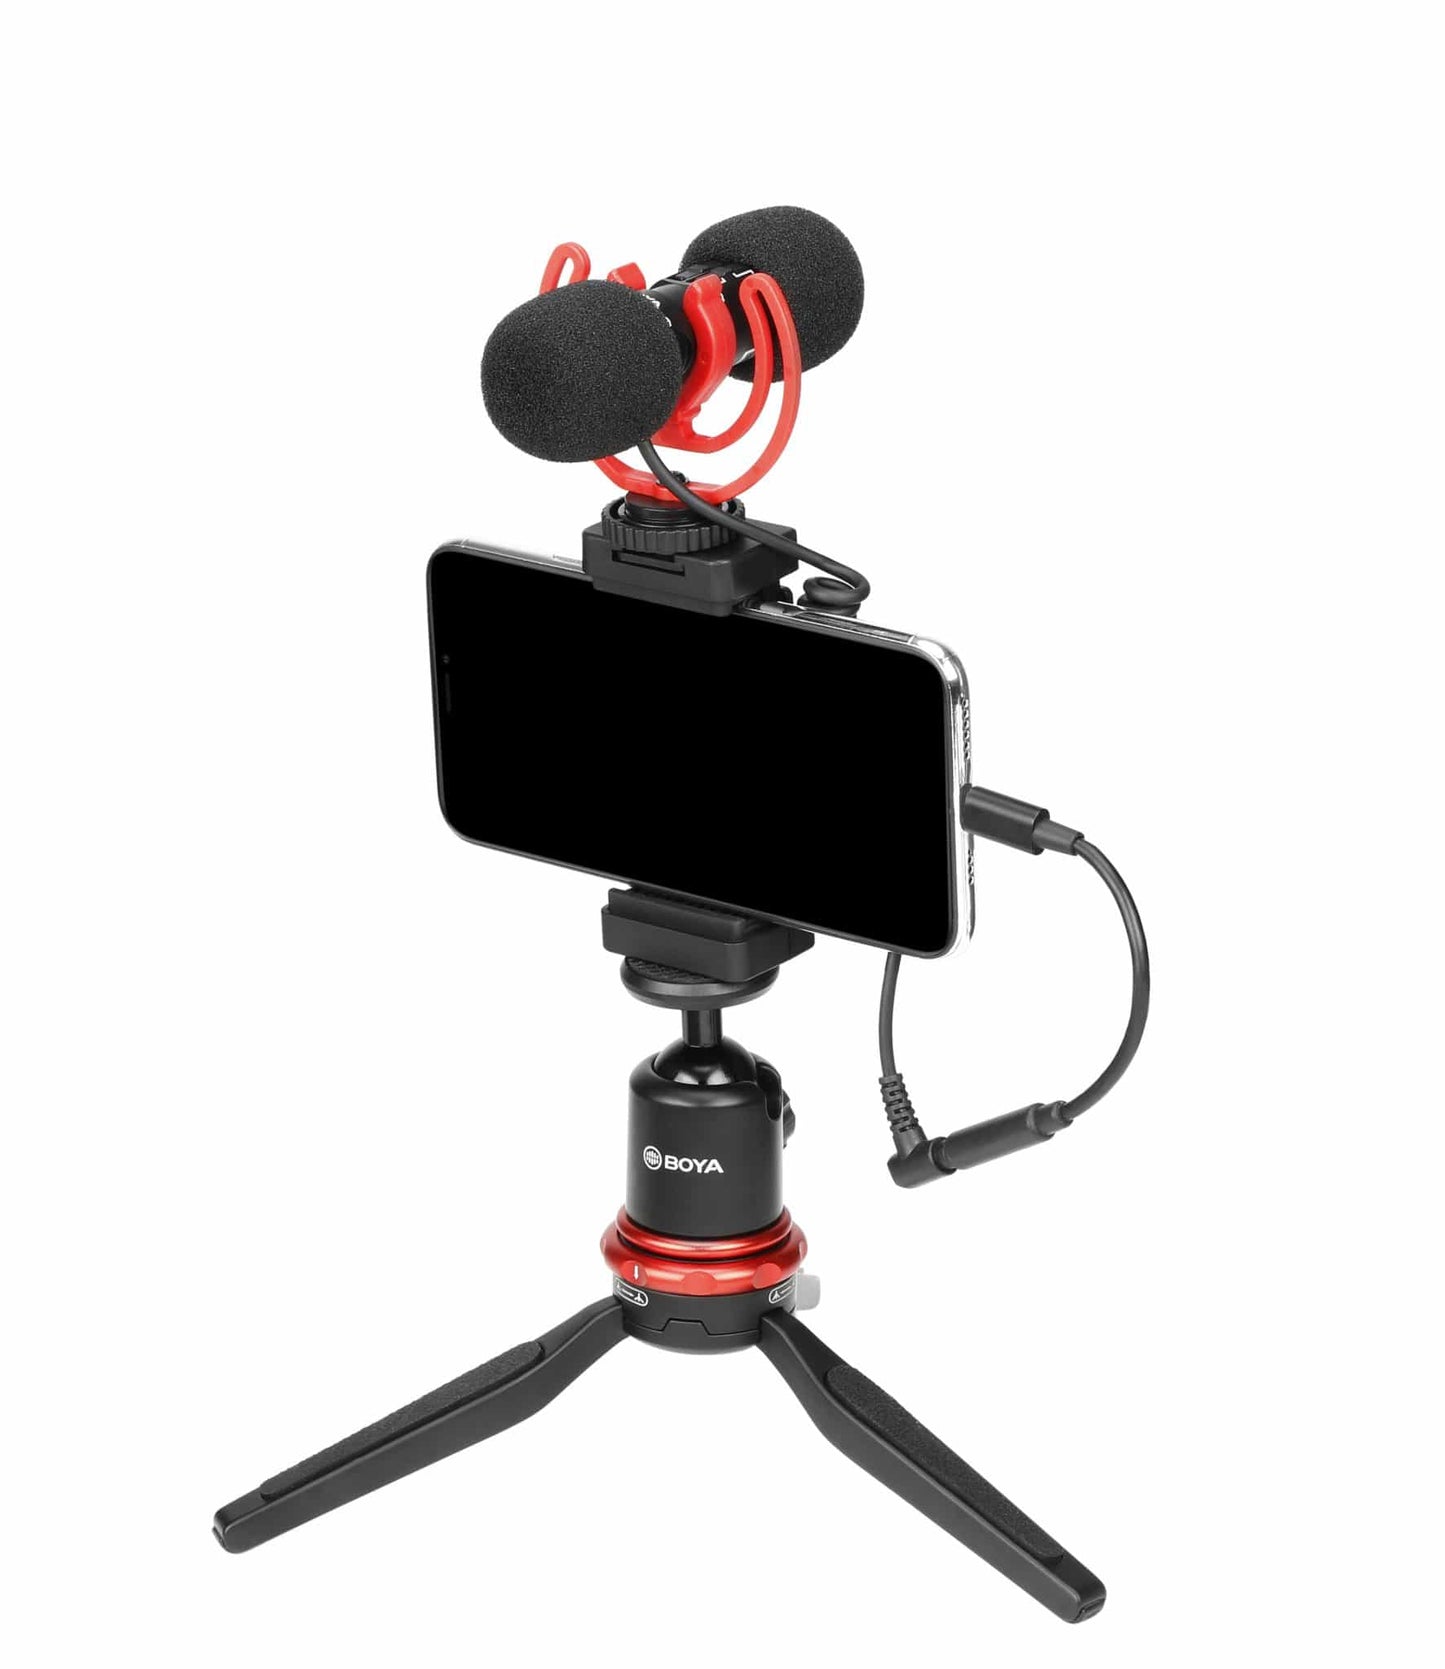 BOYA BY-MM1 PRO Dual-Capsule Shotgun microphone for smartphone & camera